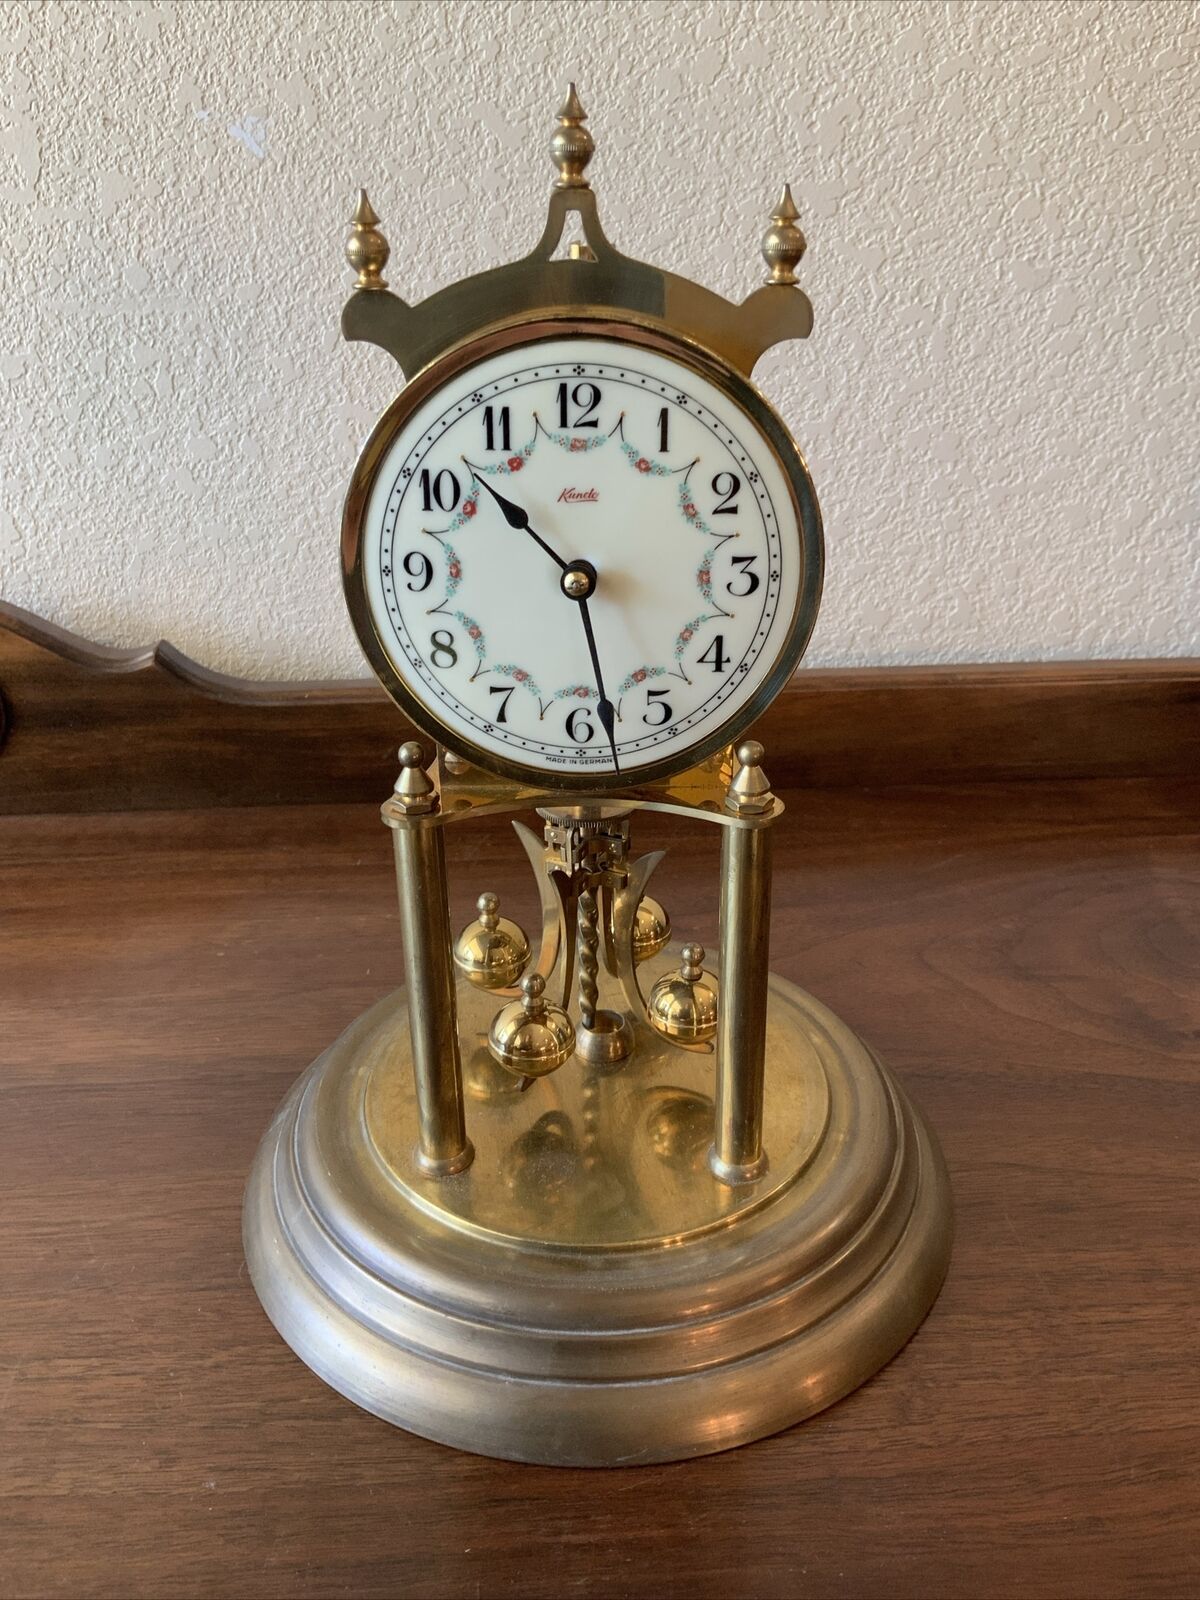 Vintage Anniversary Clock Kundo Kieninger & Obergfell Germany - untested, no key